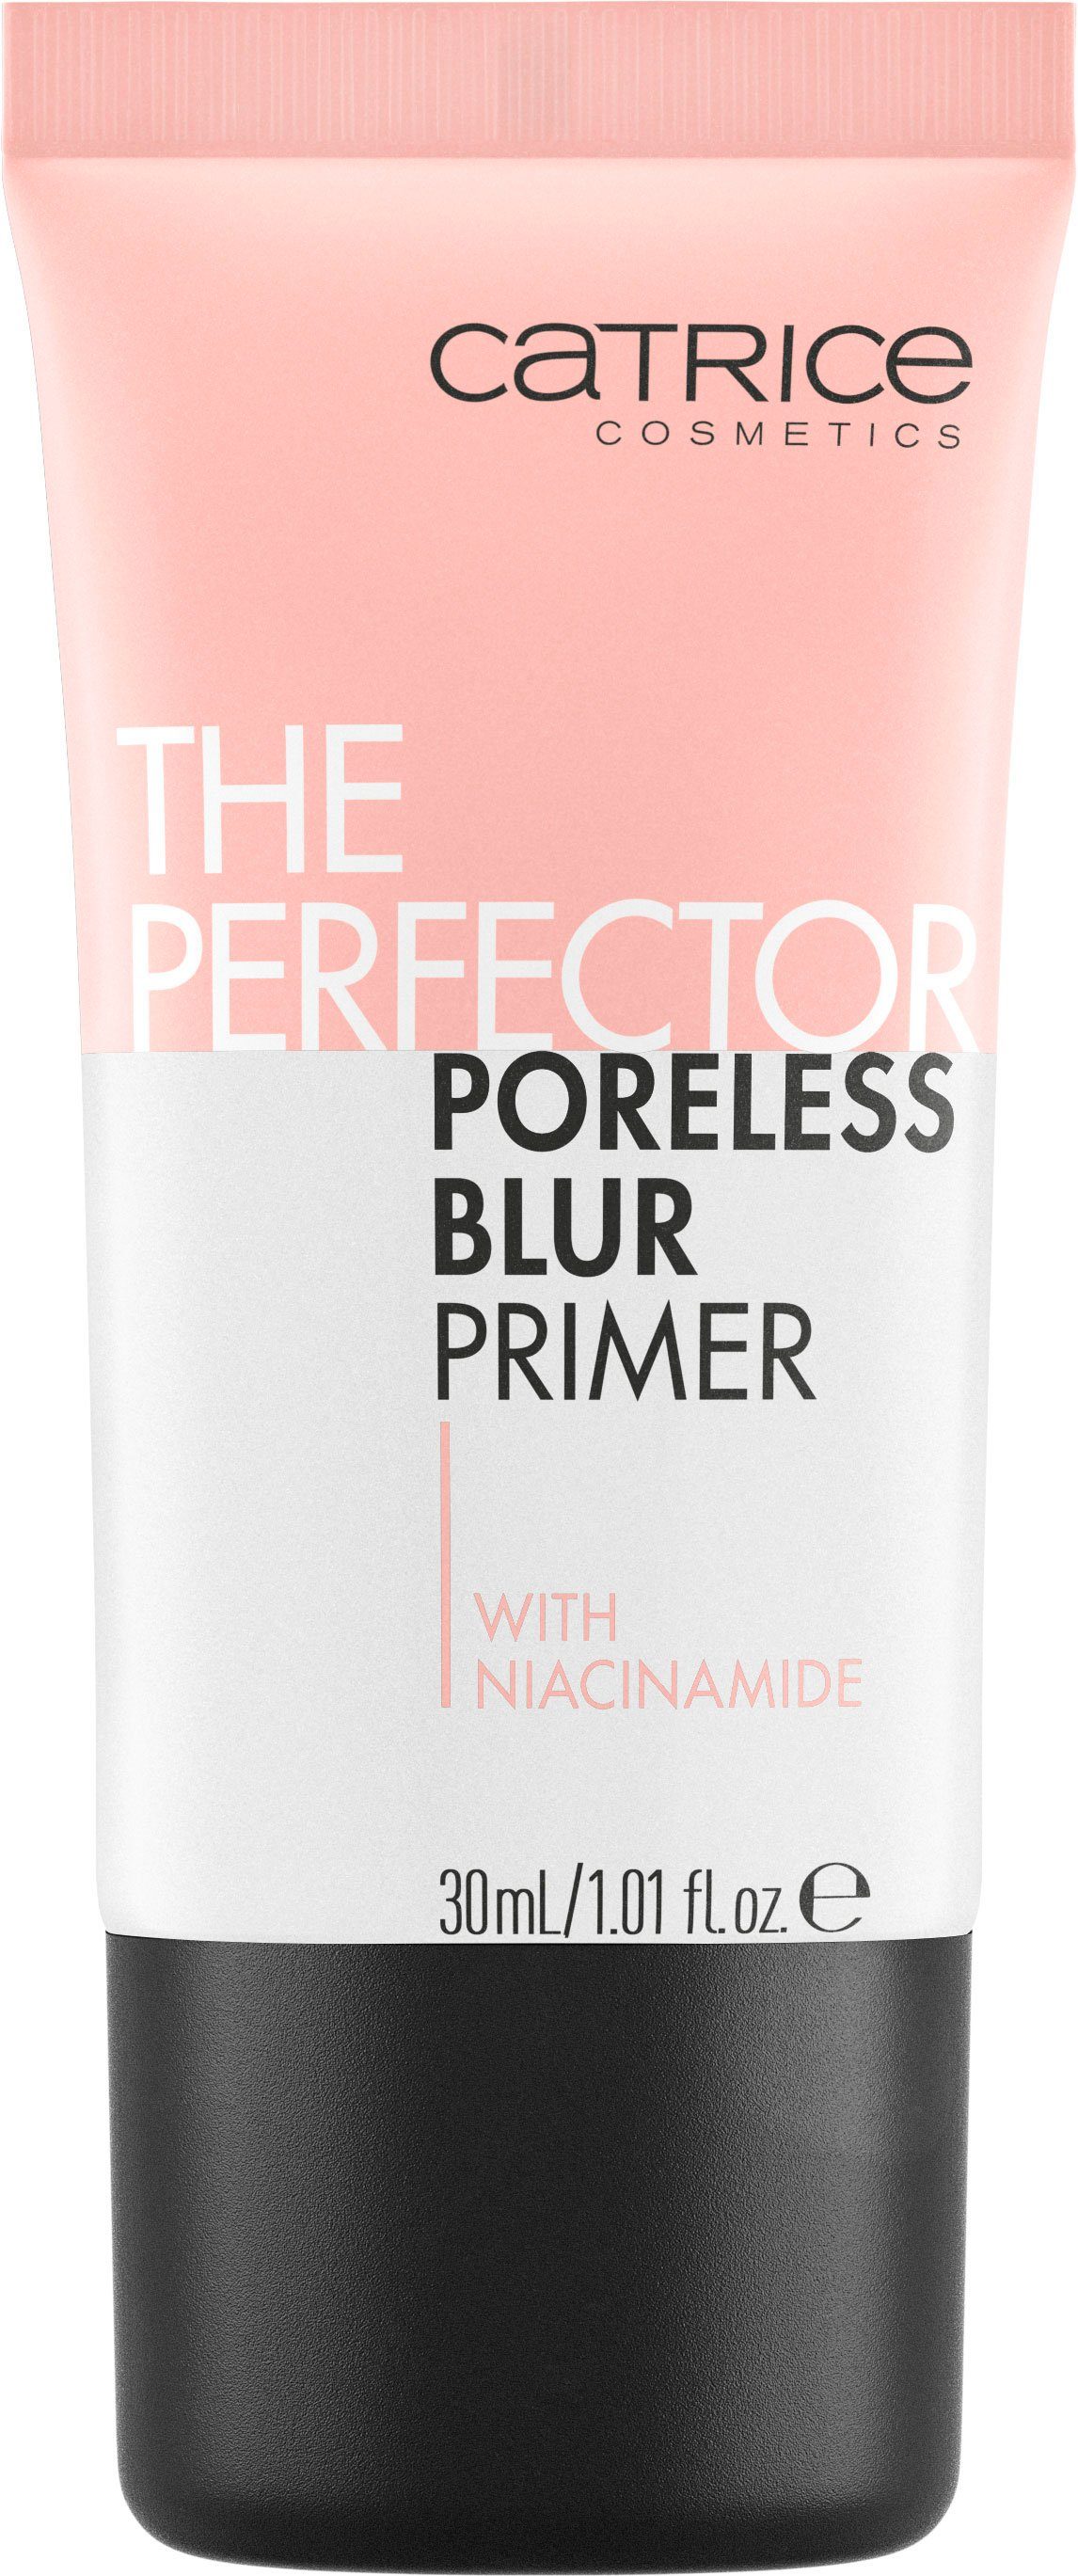 Catrice Blur Primer 3-tlg. Poreless The Perfector Primer,